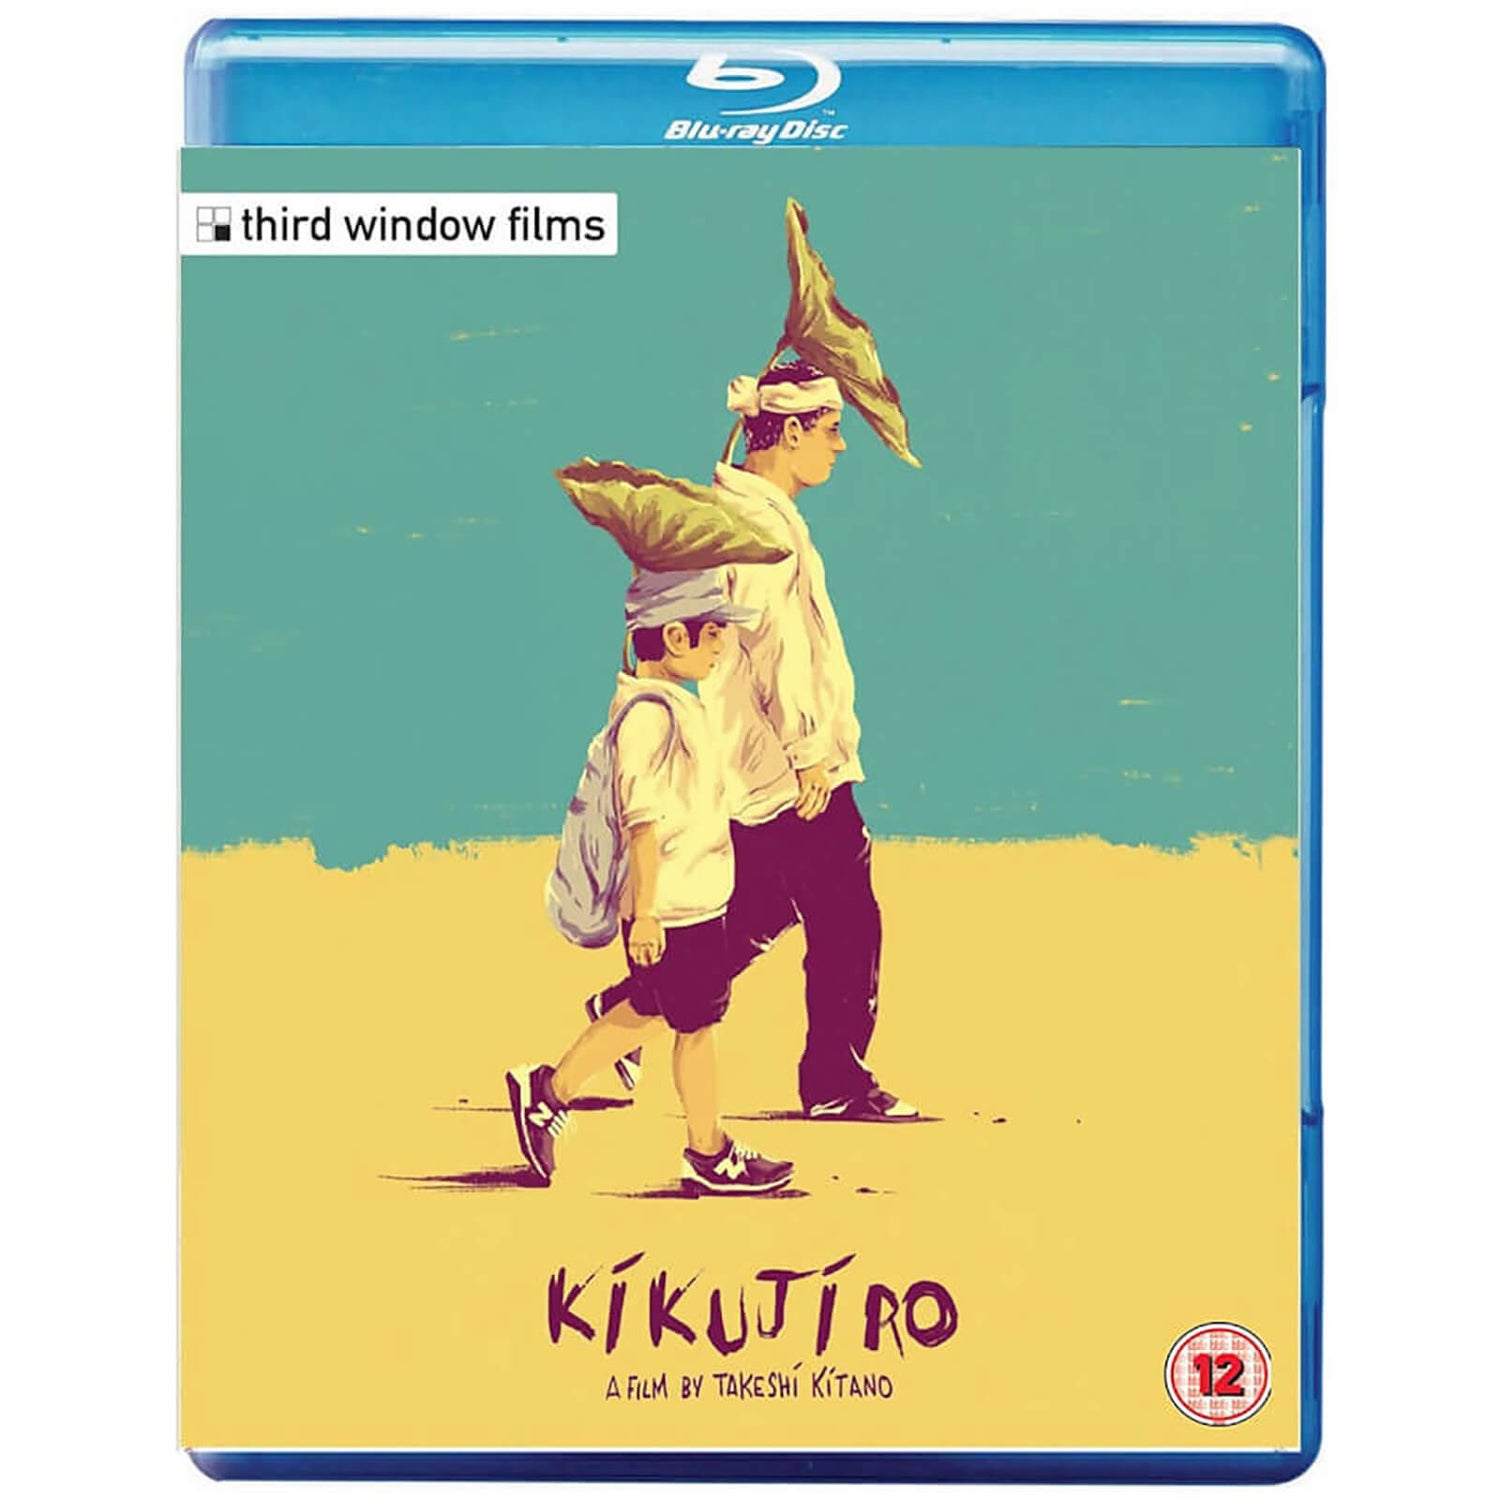 Kikujiro Blu-ray